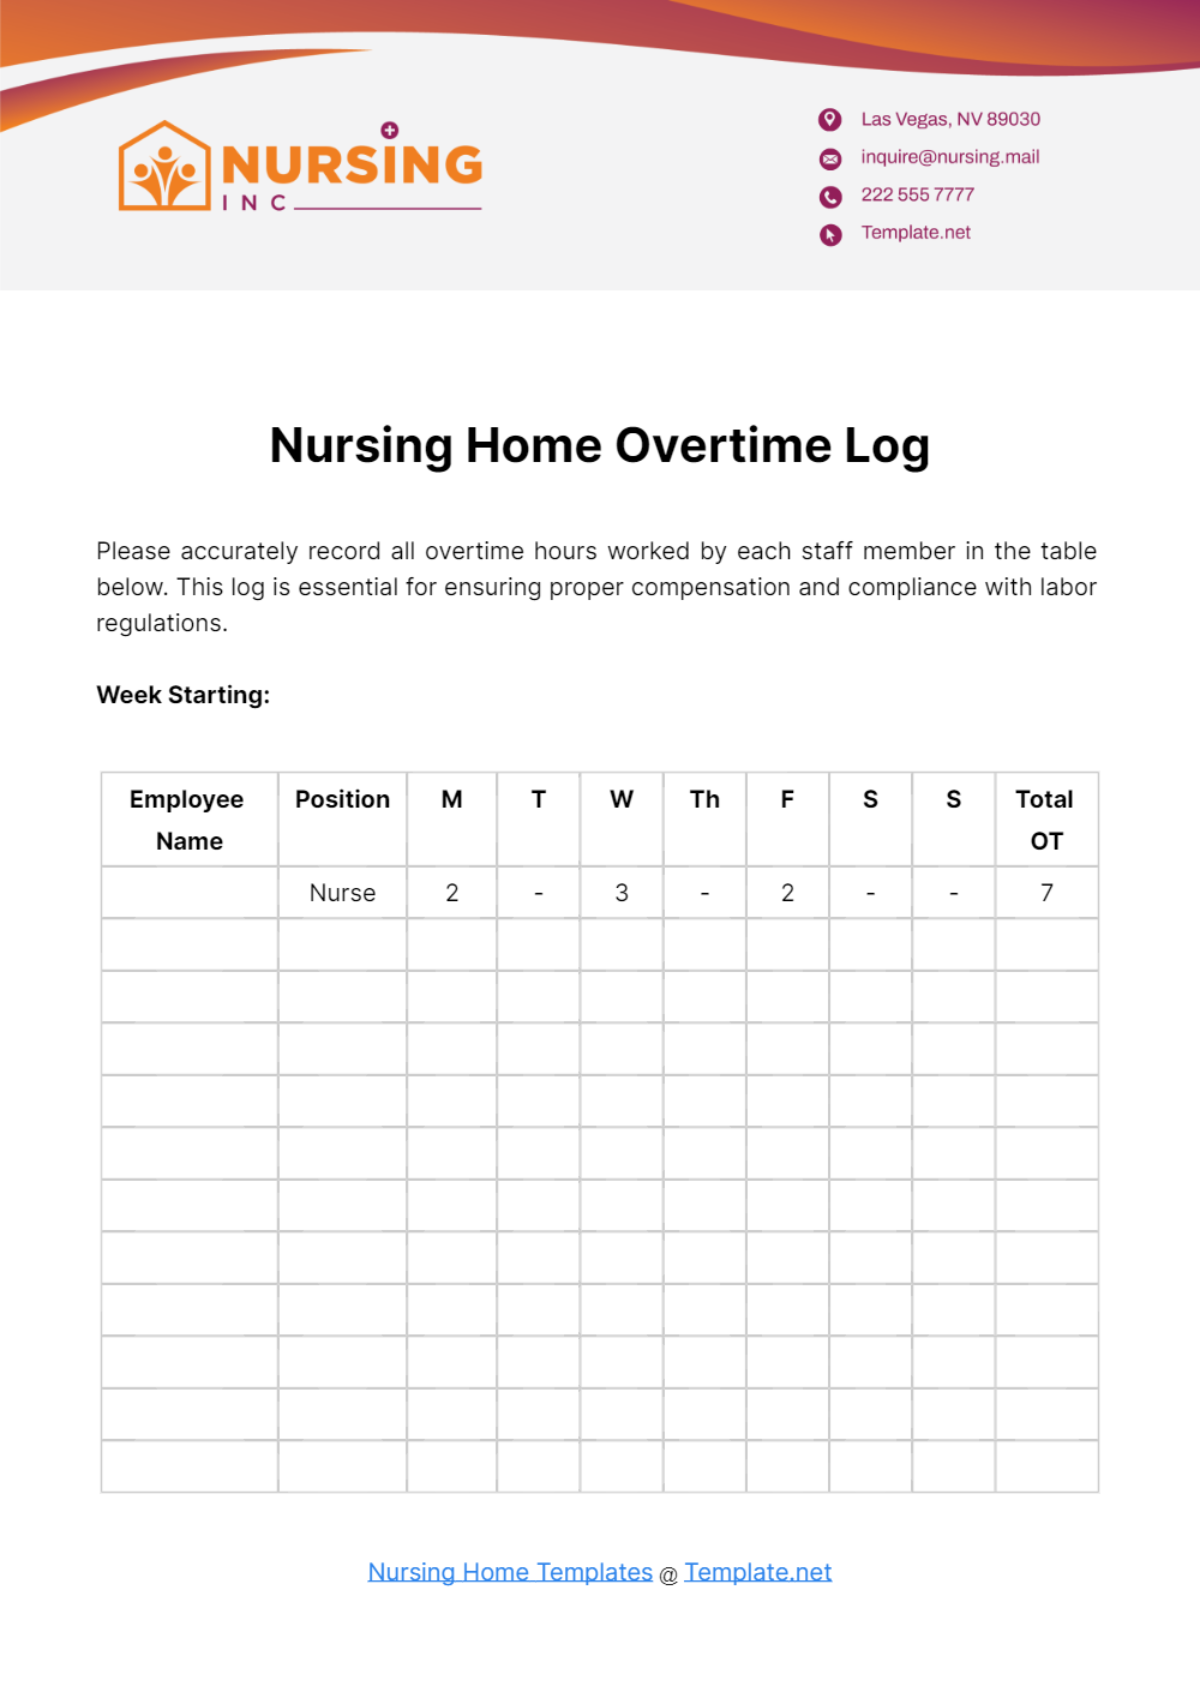 Free Nursing Home Overtime Log Template